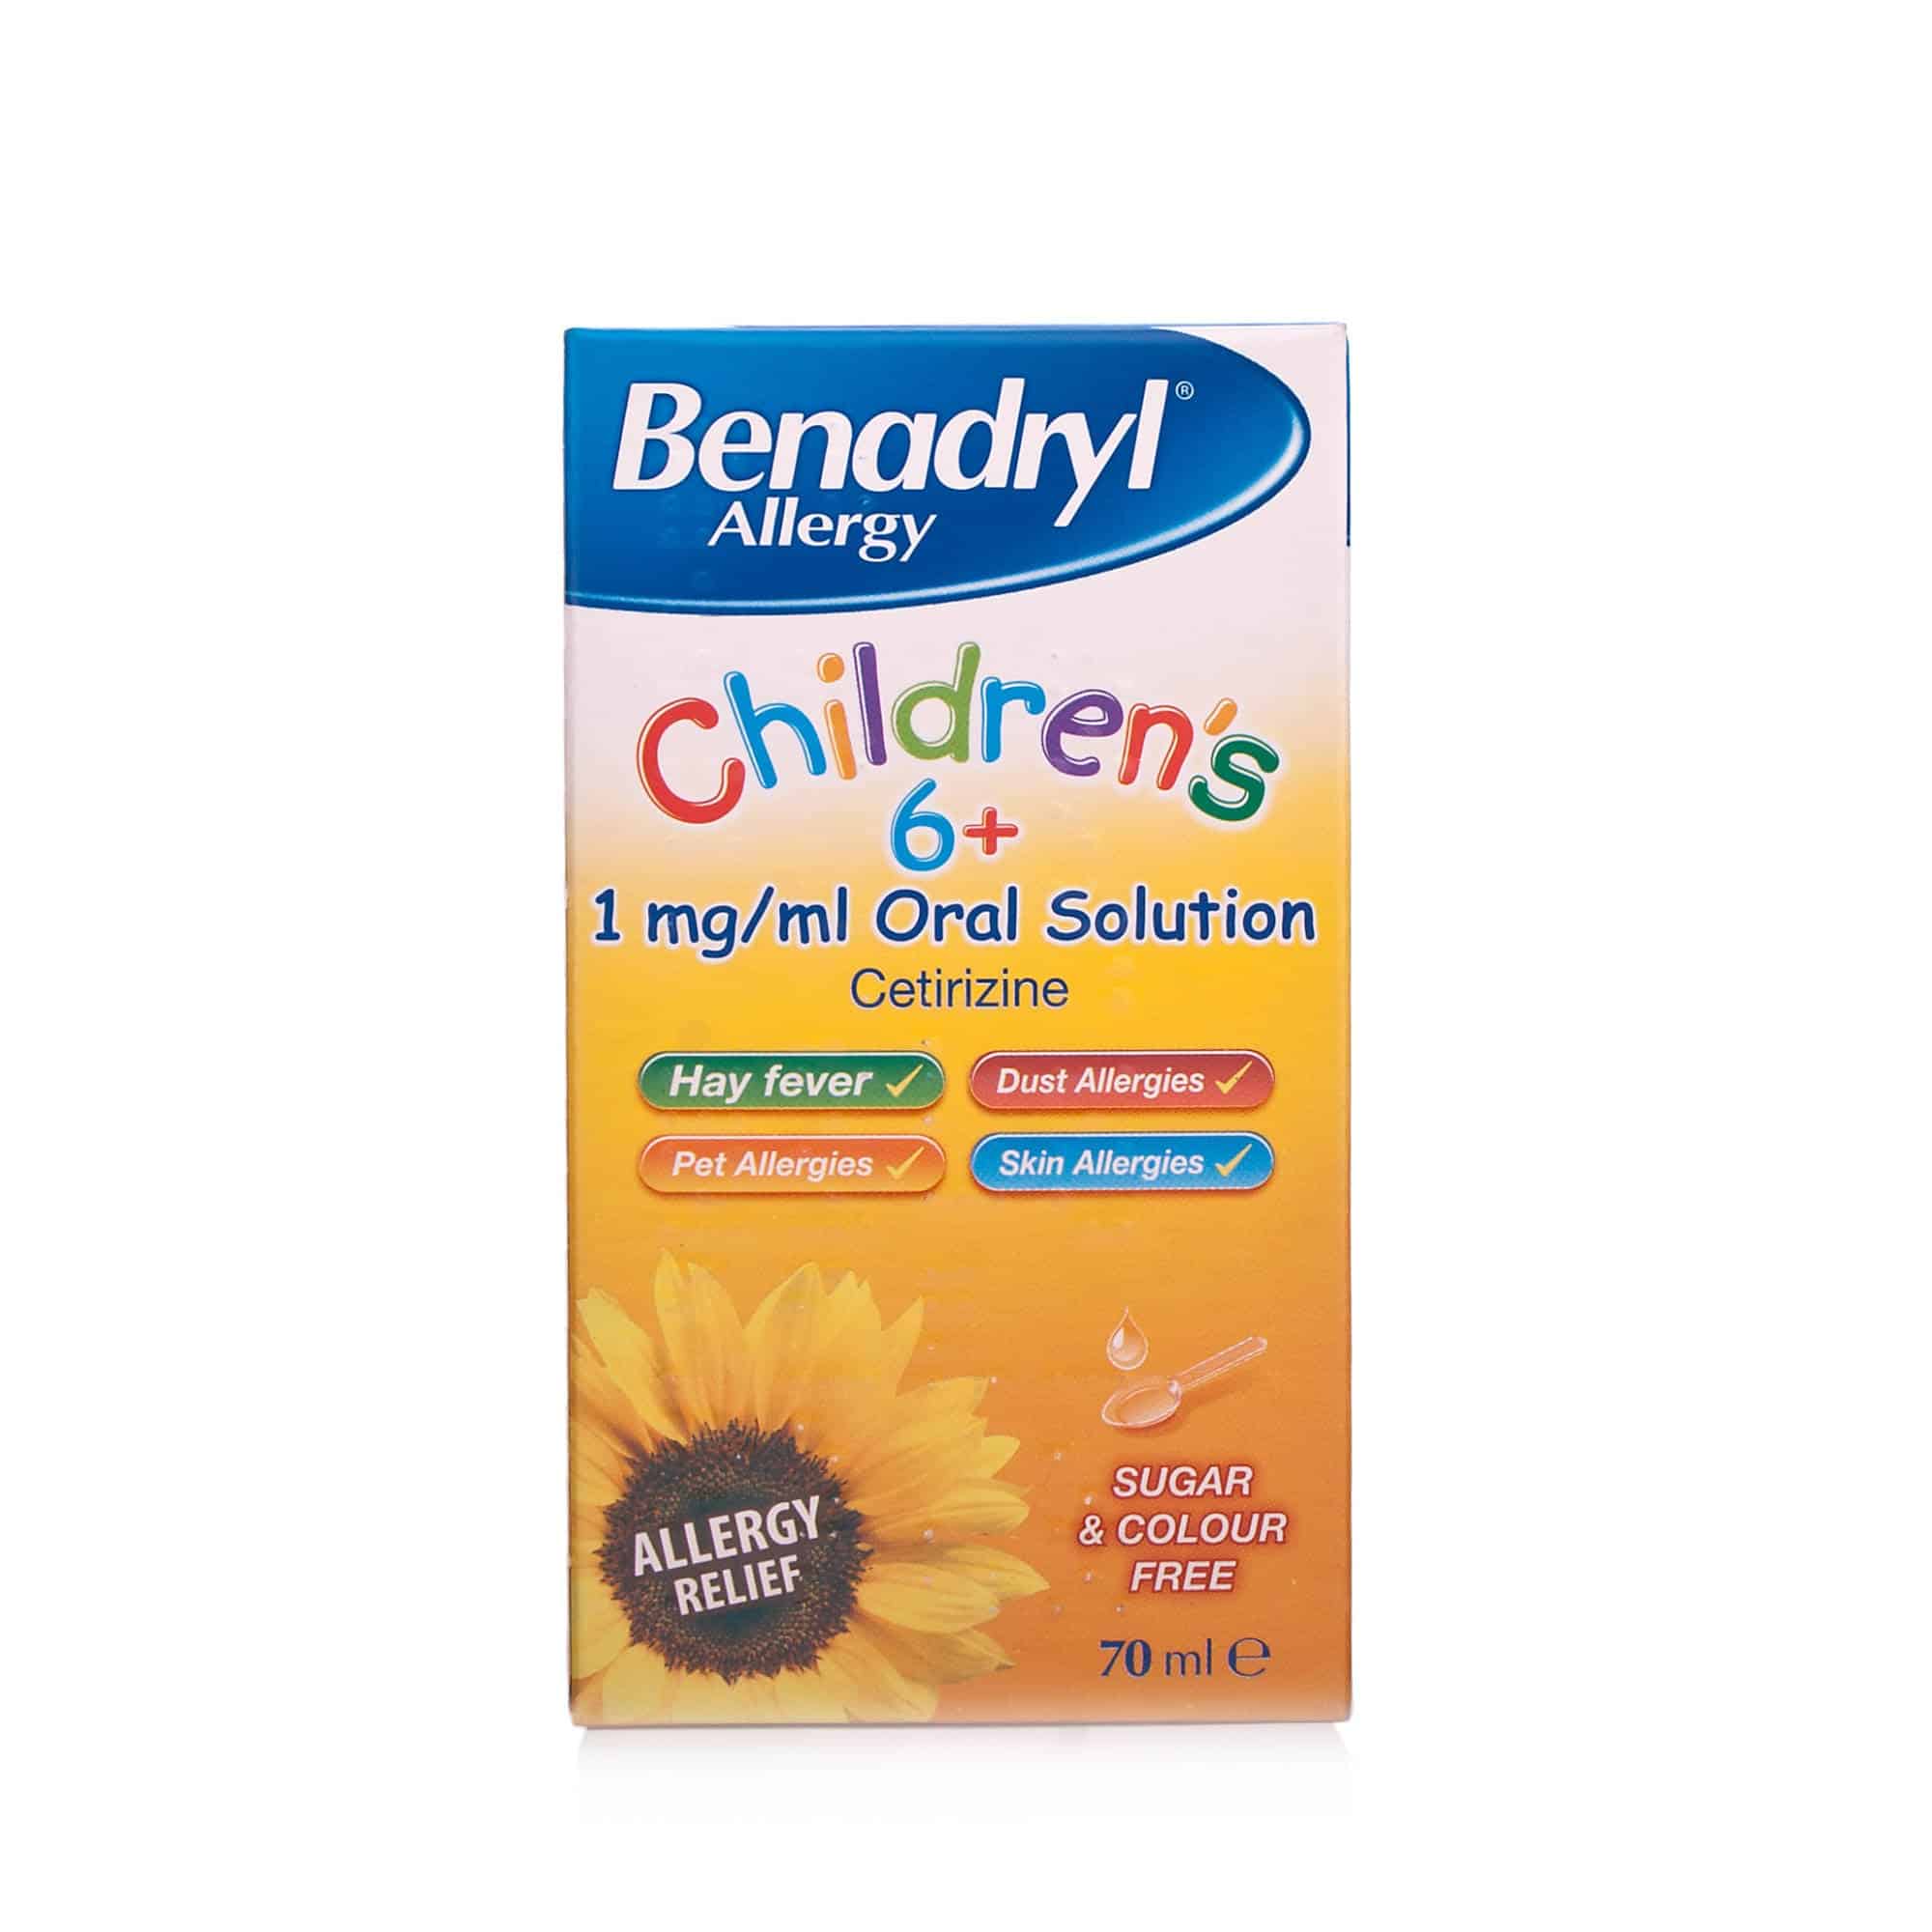 Benadryl Allergy Childrenâs 6+ 1mg/ml Oral Solution (70ml Bottle ...